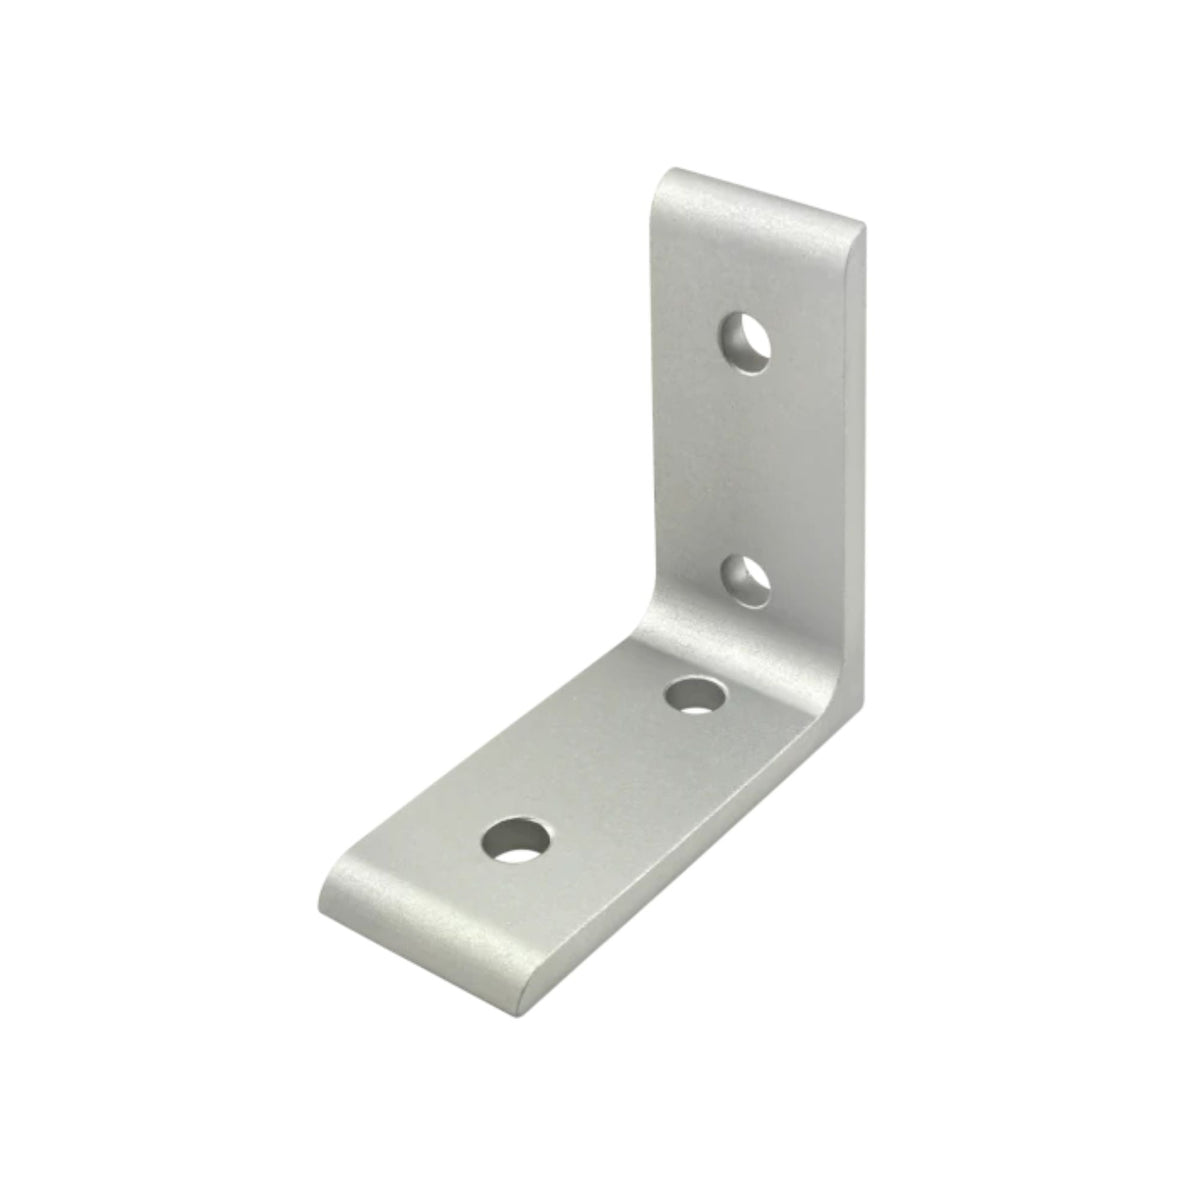 metal corner bracket with four mounting holes